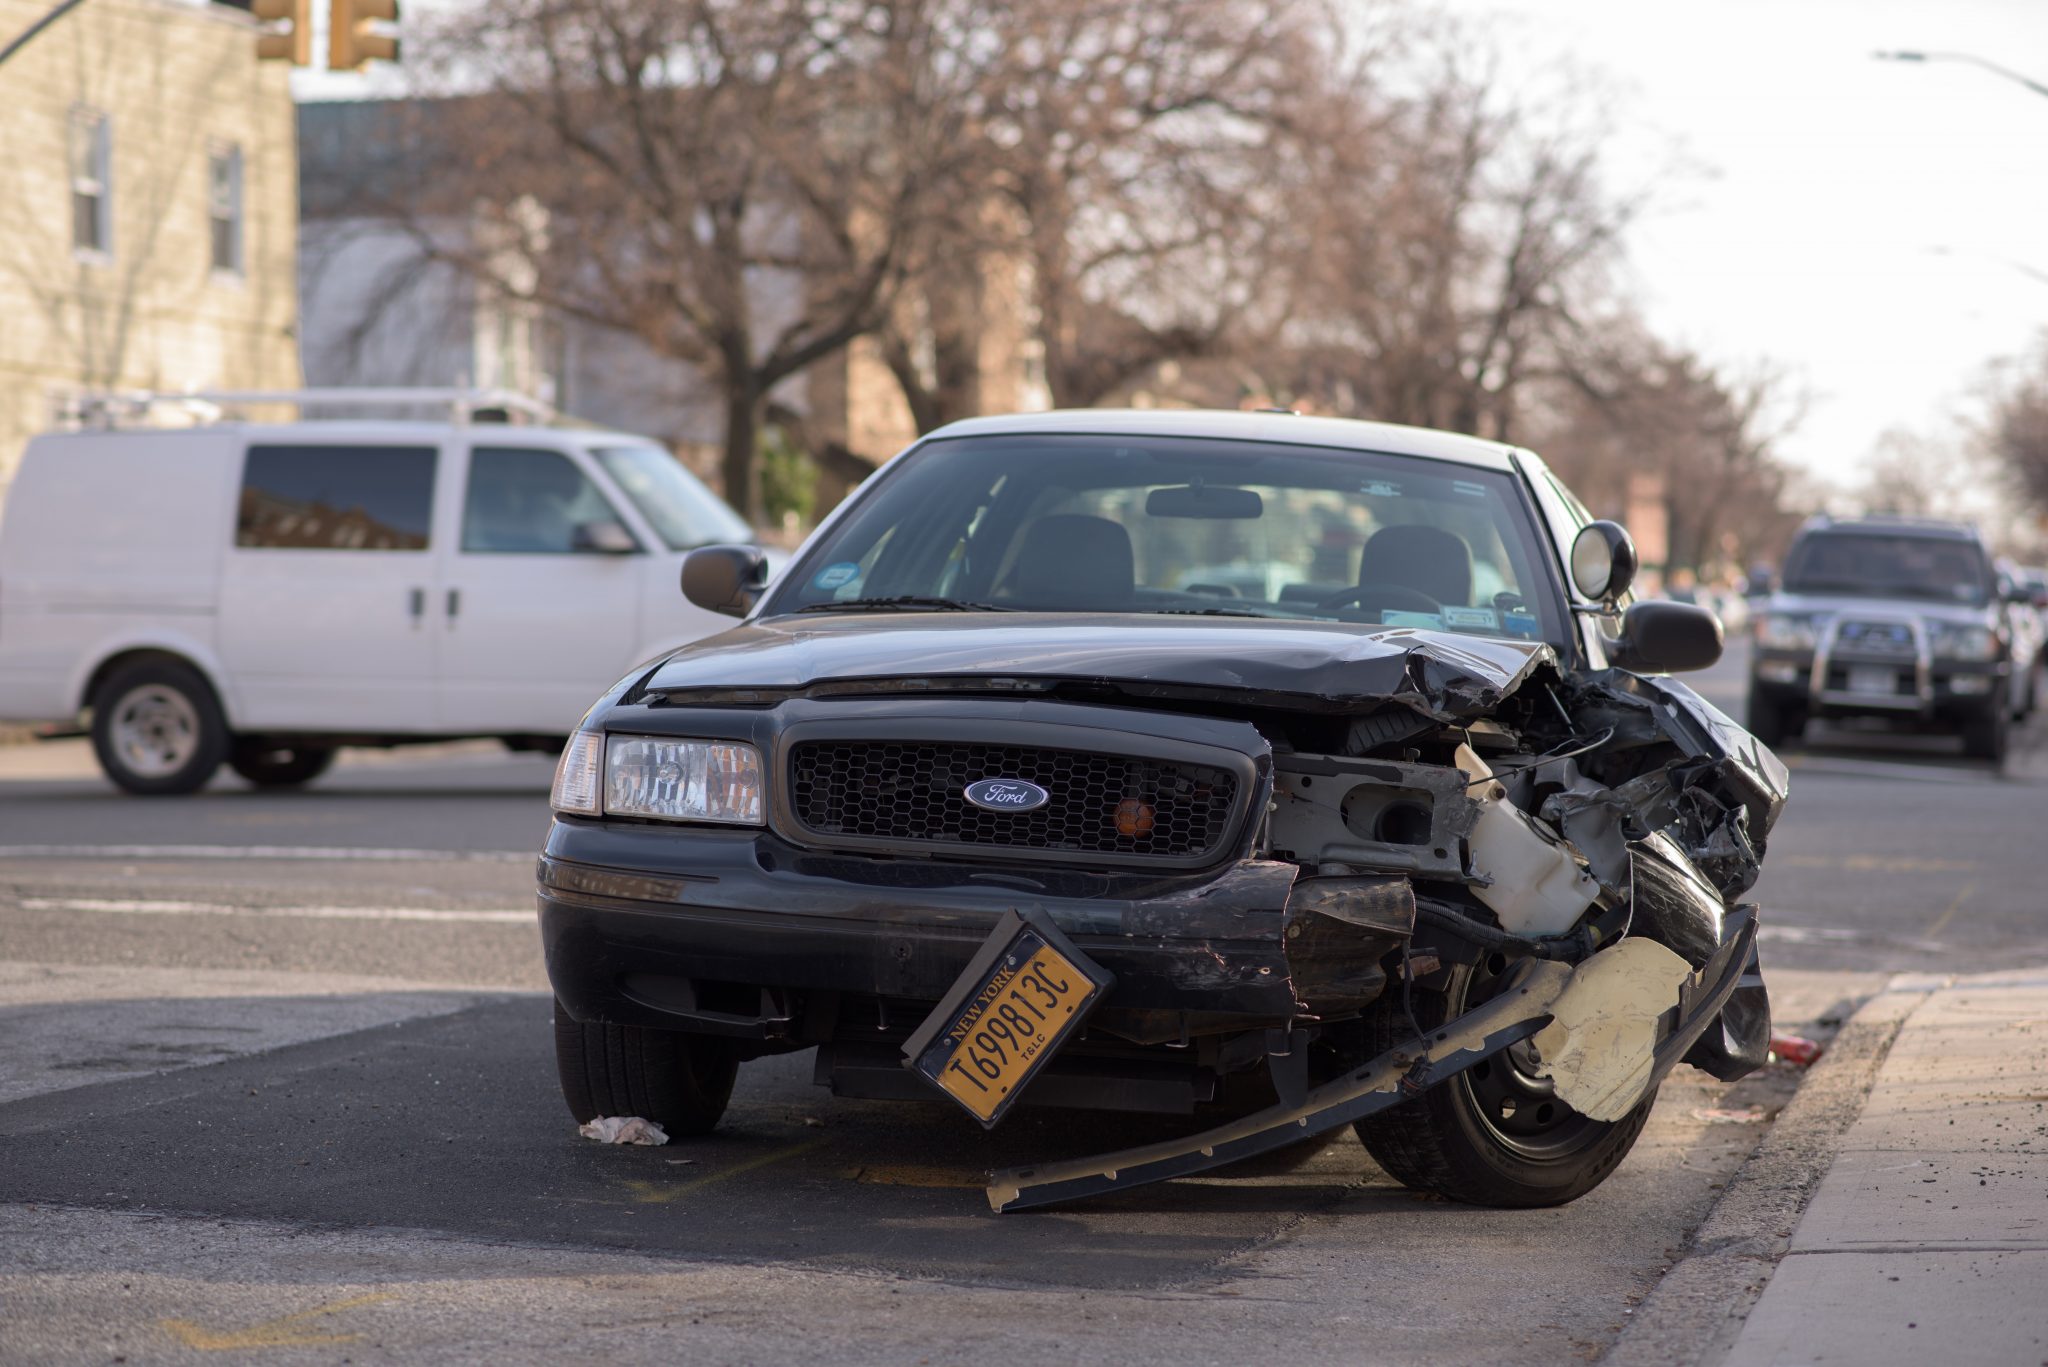 Cash for scrap car Car Accident Traffic Accident Road Risks Car Dent Company Vehicle Car Accident auto insurance Car Crash